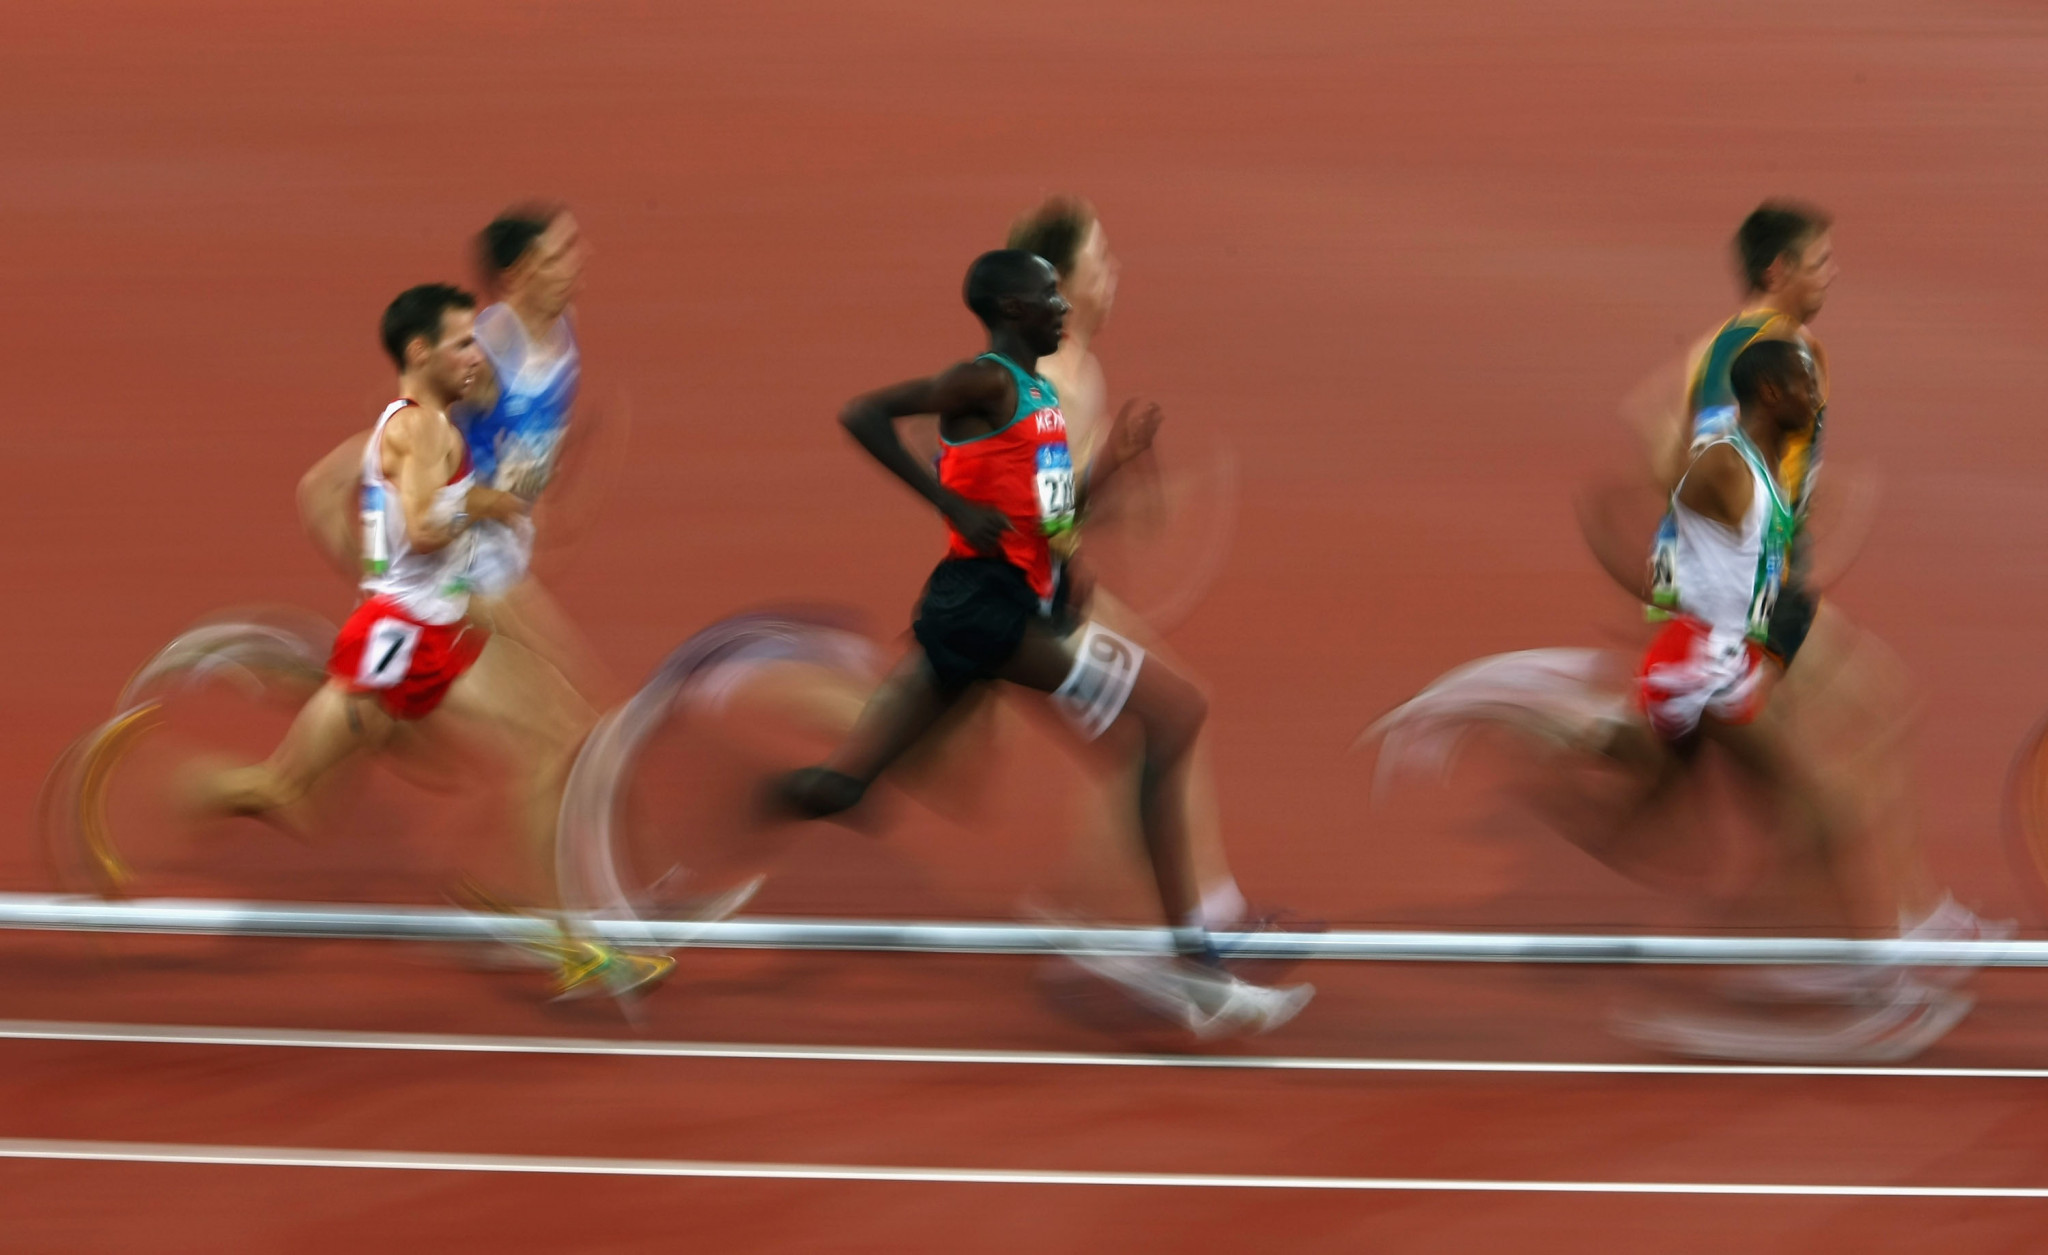 World Athletics launches online tool to track Paris 2024 qualification